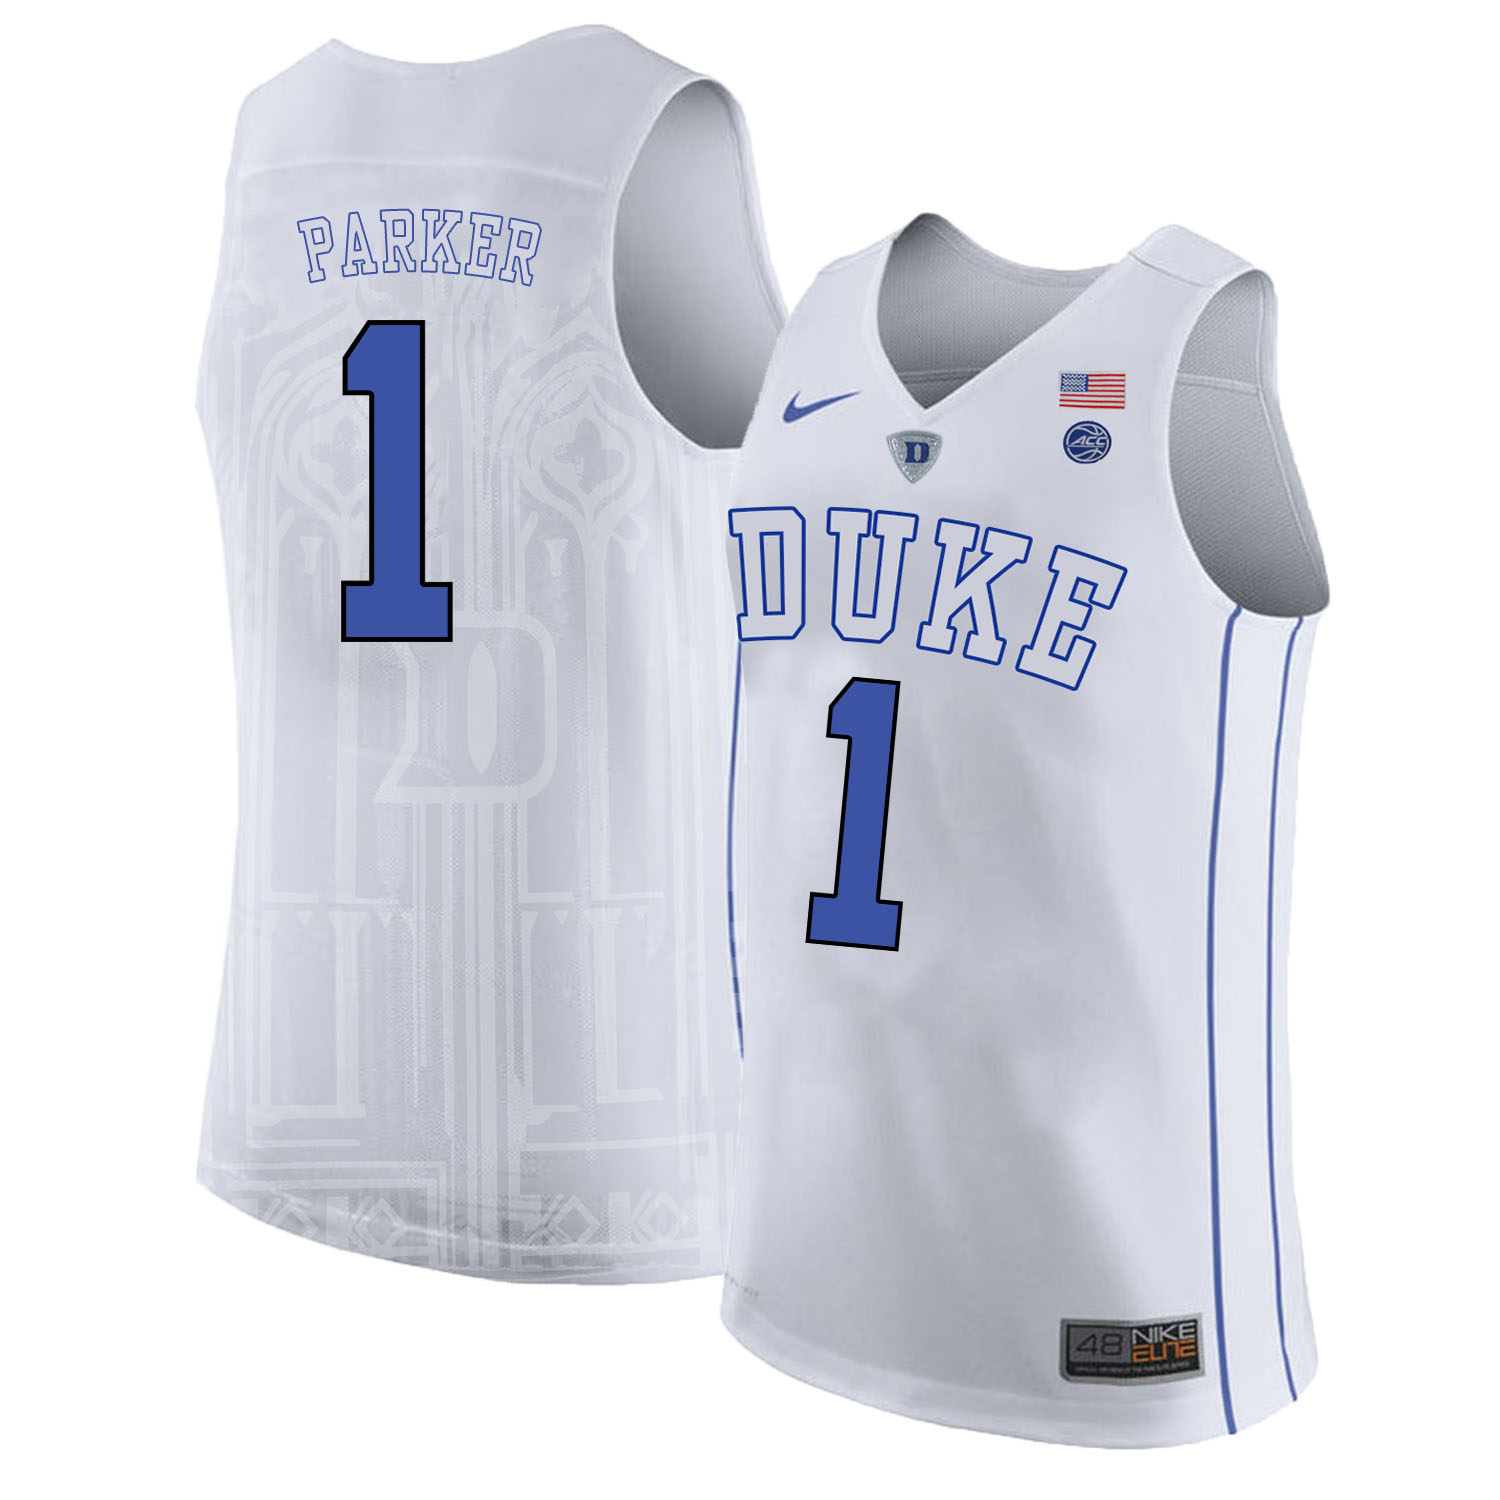 Duke Blue Devils 1 Jabari Parker White Nike College Basketabll Jersey